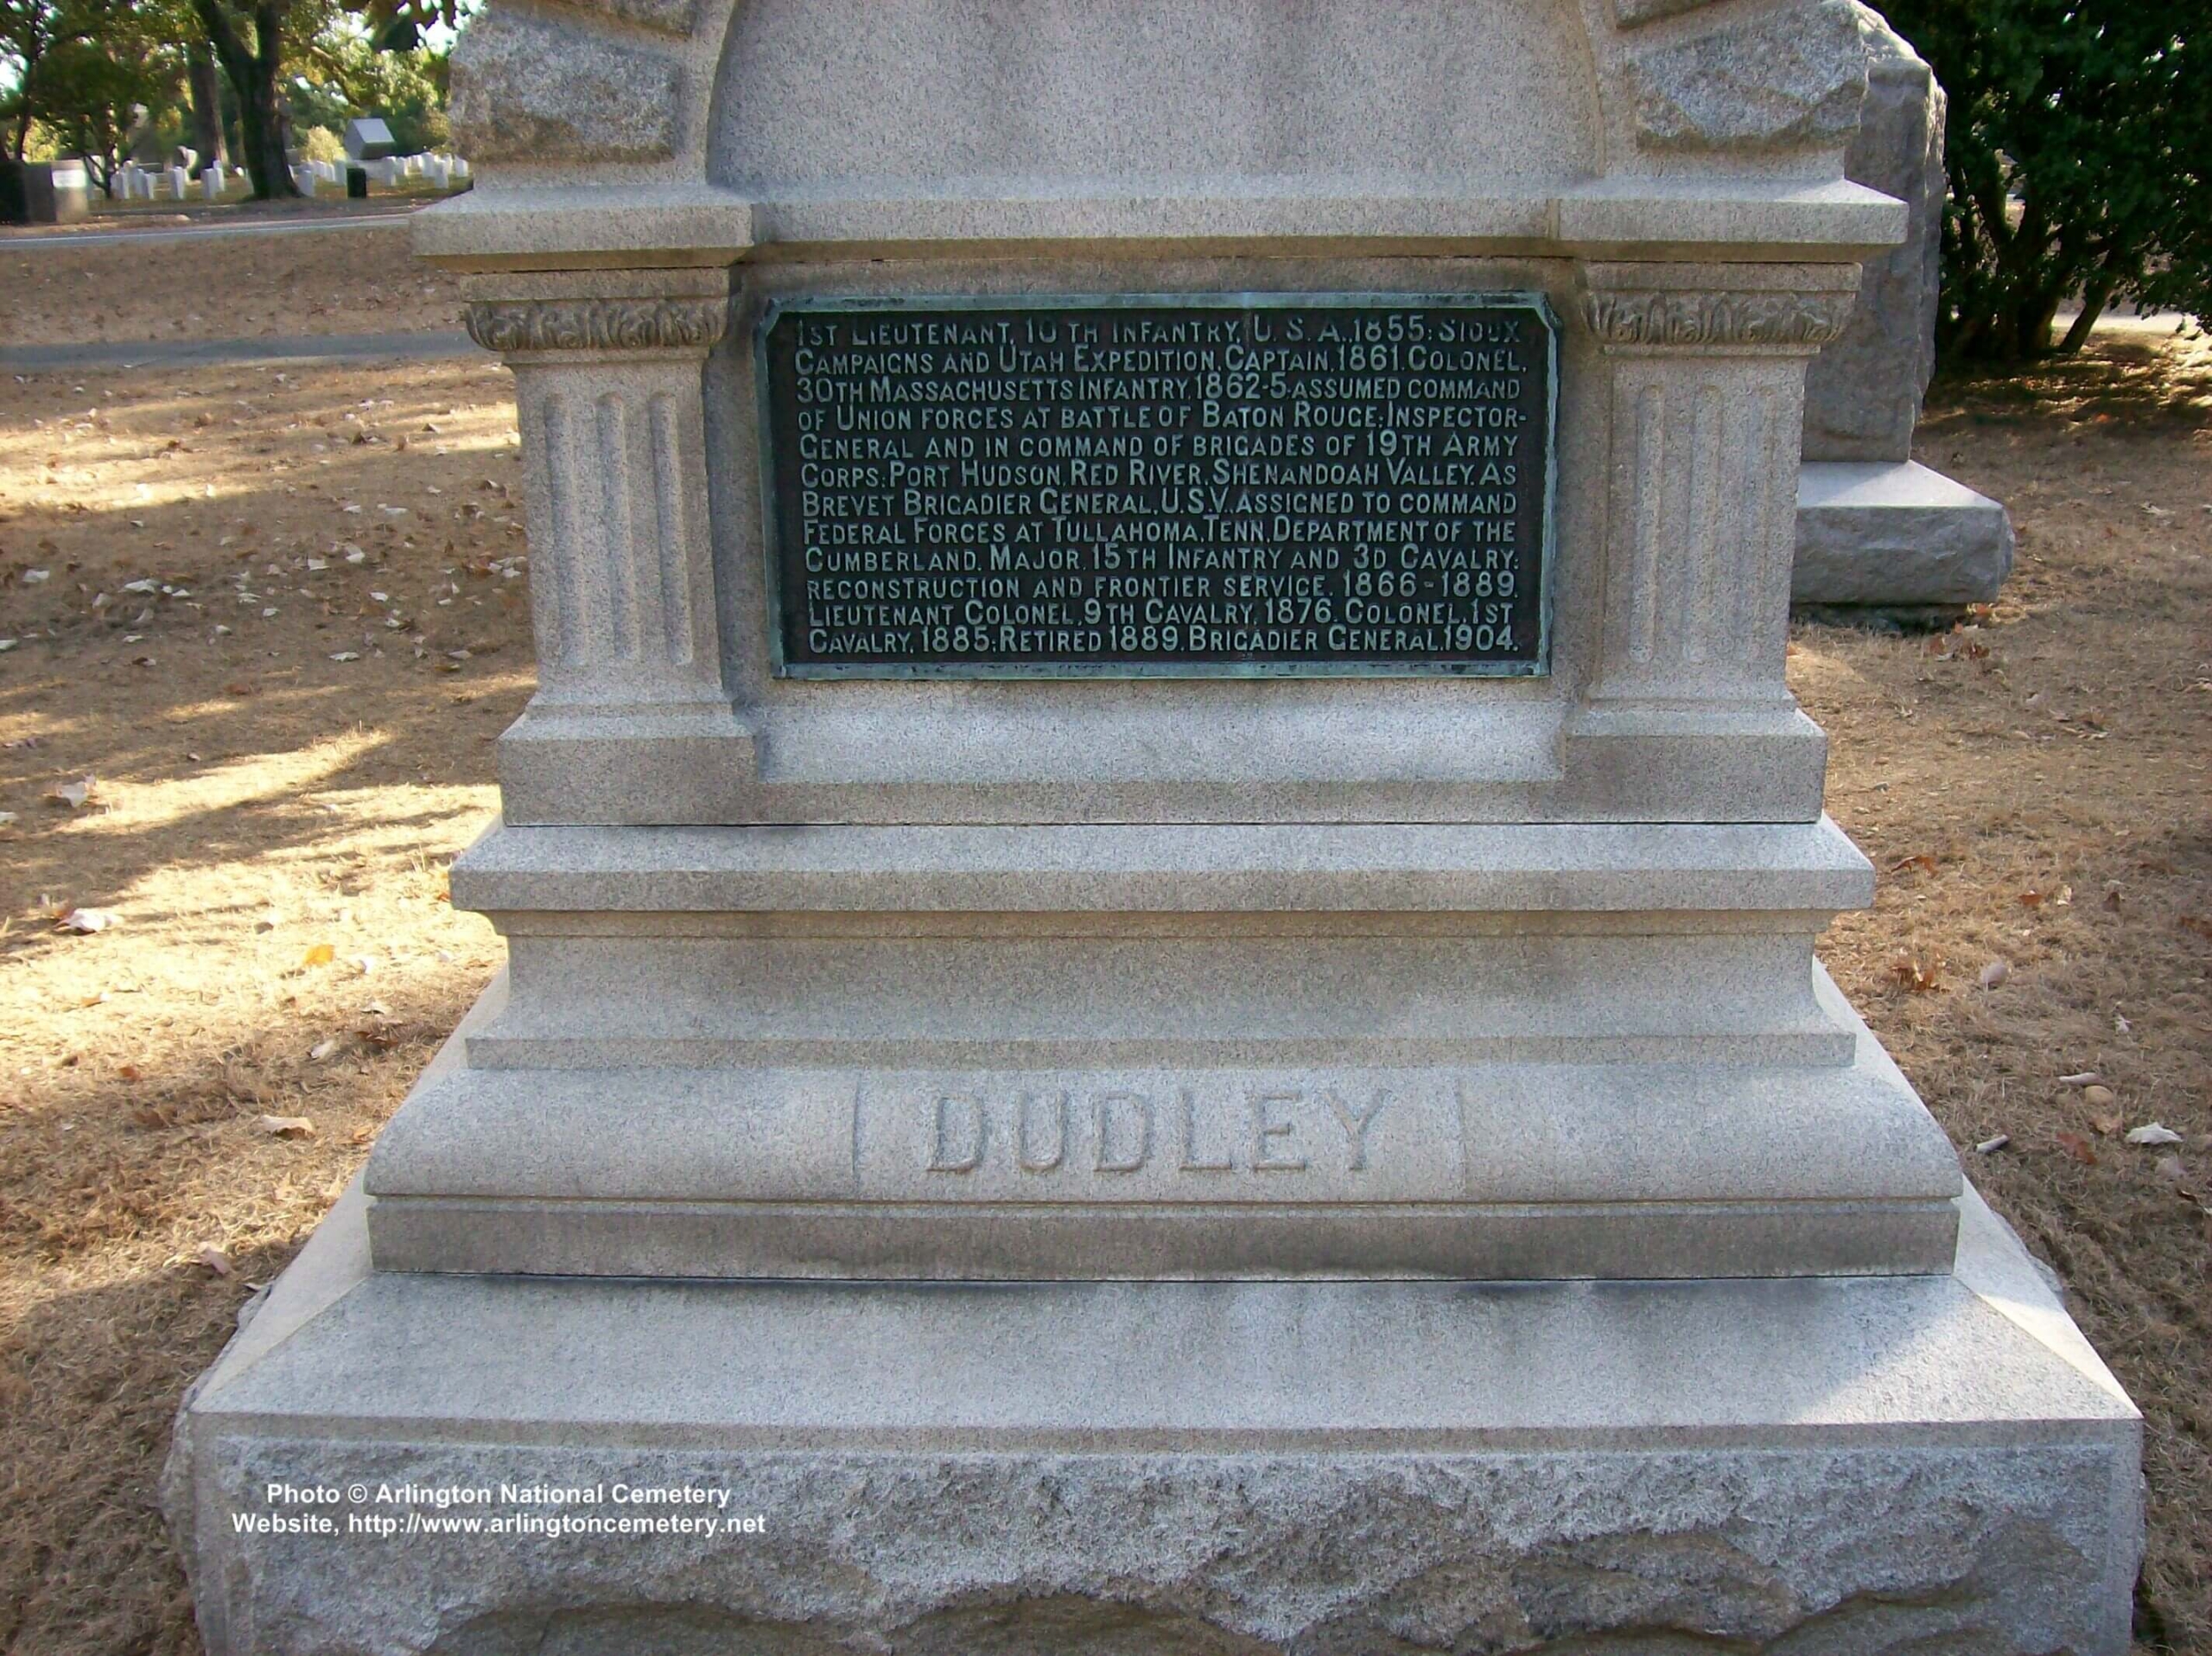 namdudley-gravesite-photo-october-2007-003